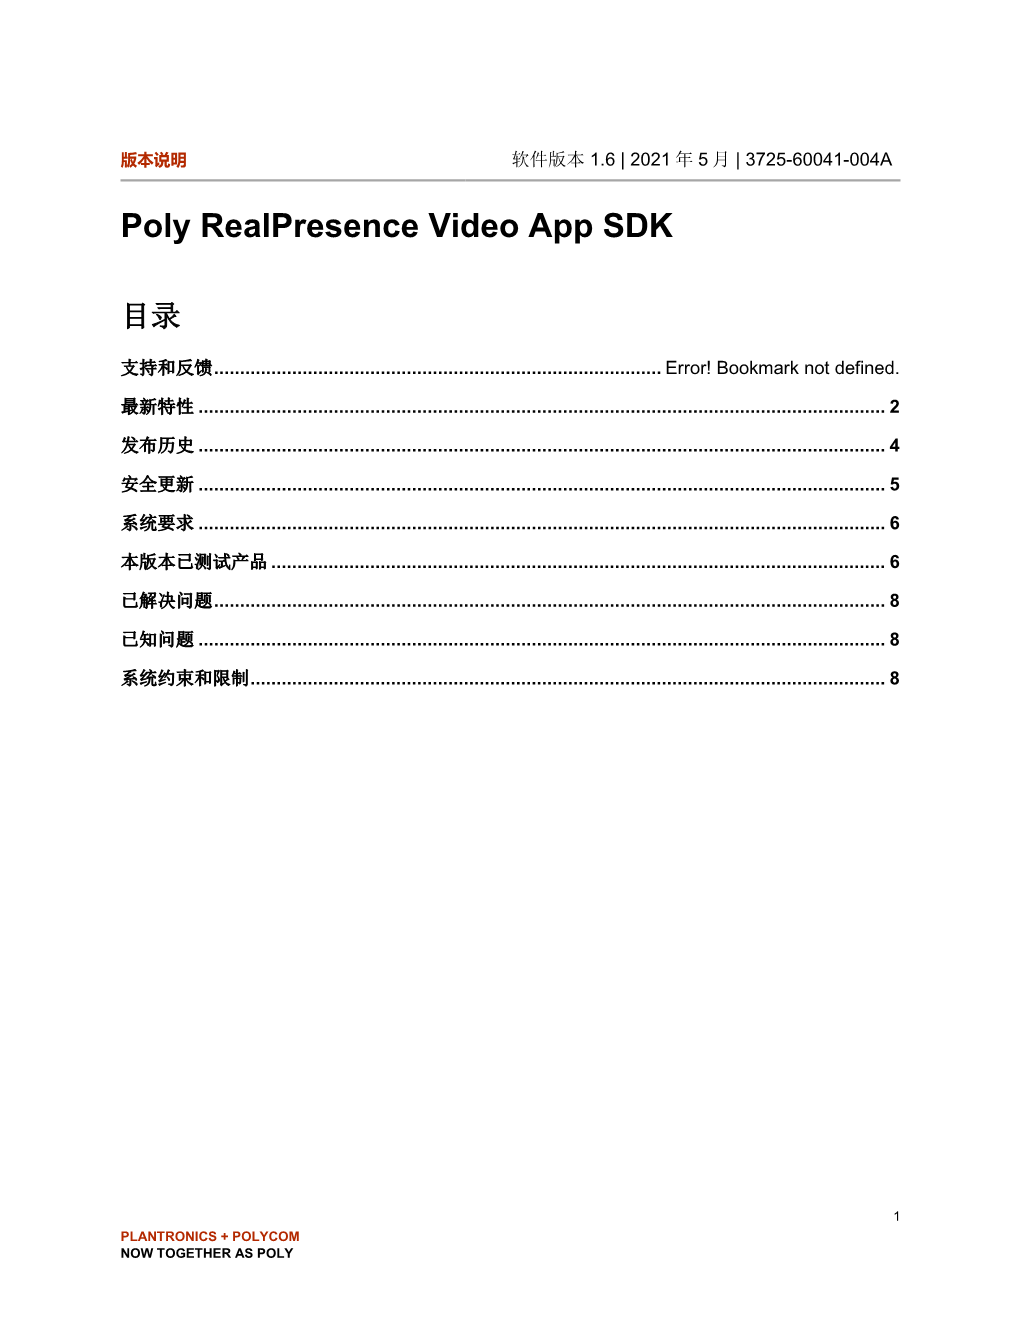 Poly Realpresence Video App SDK